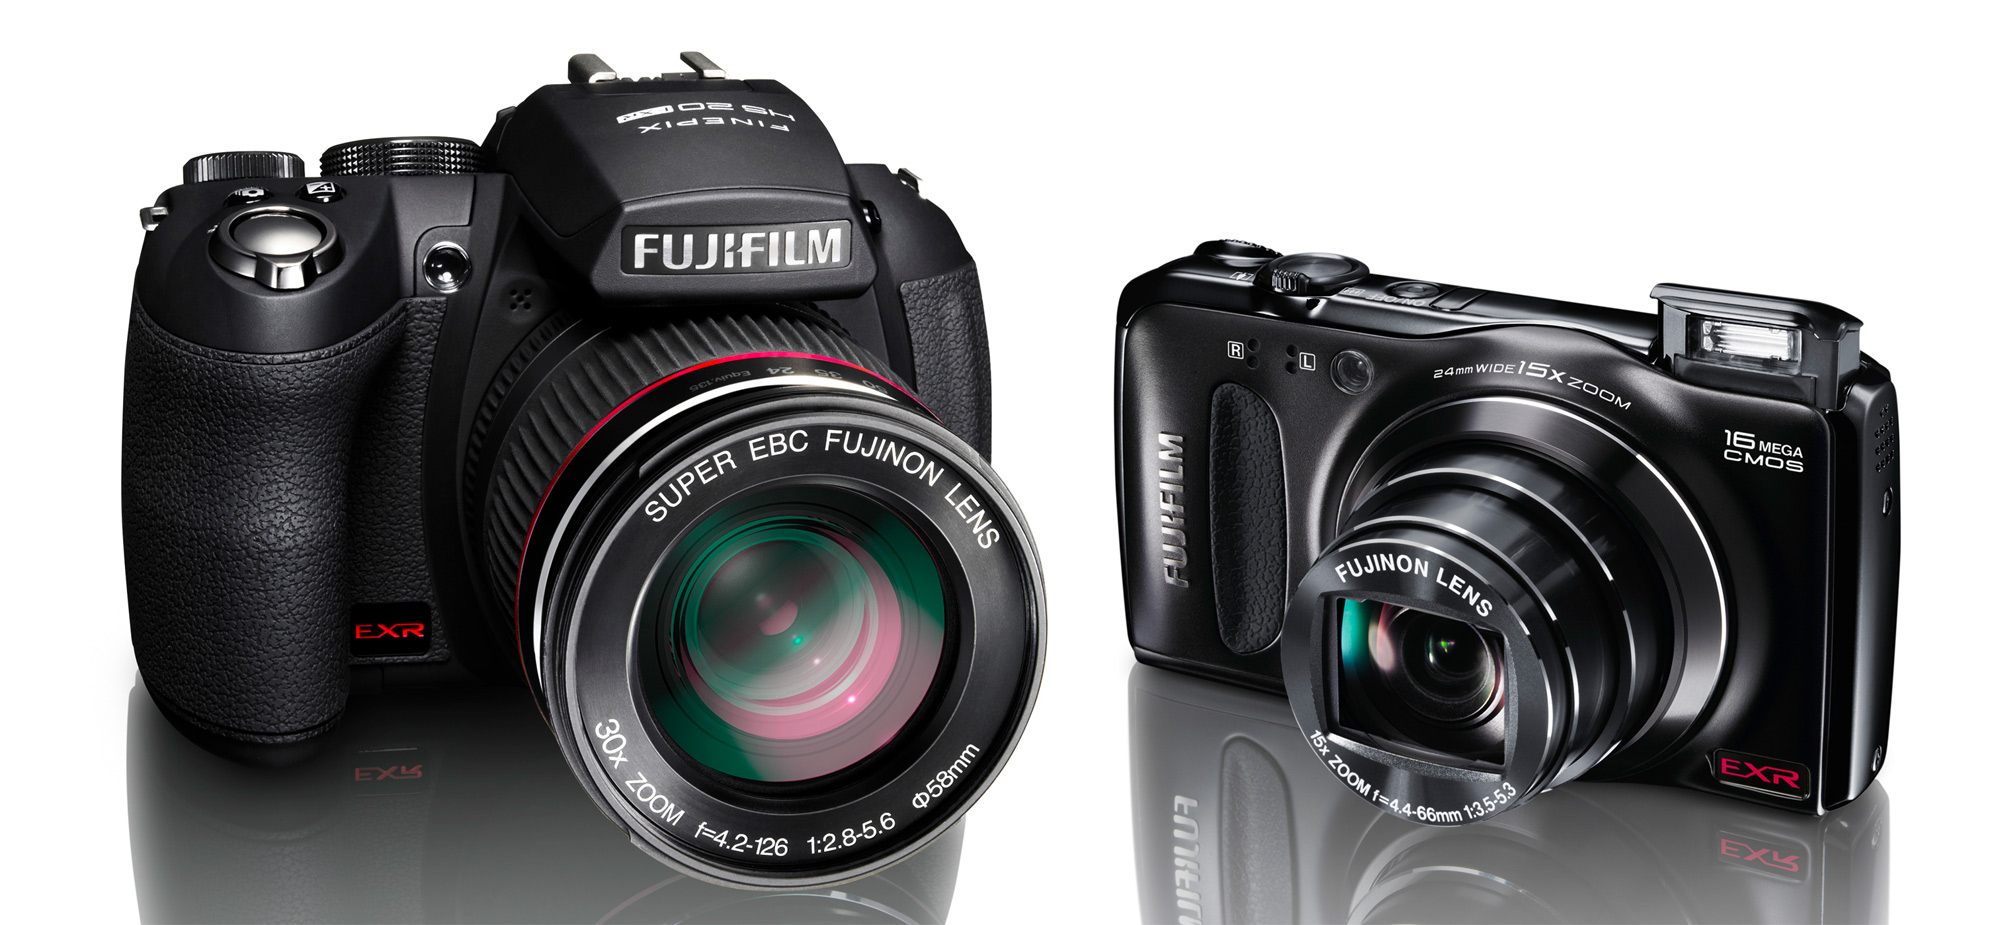 Fuji camera's